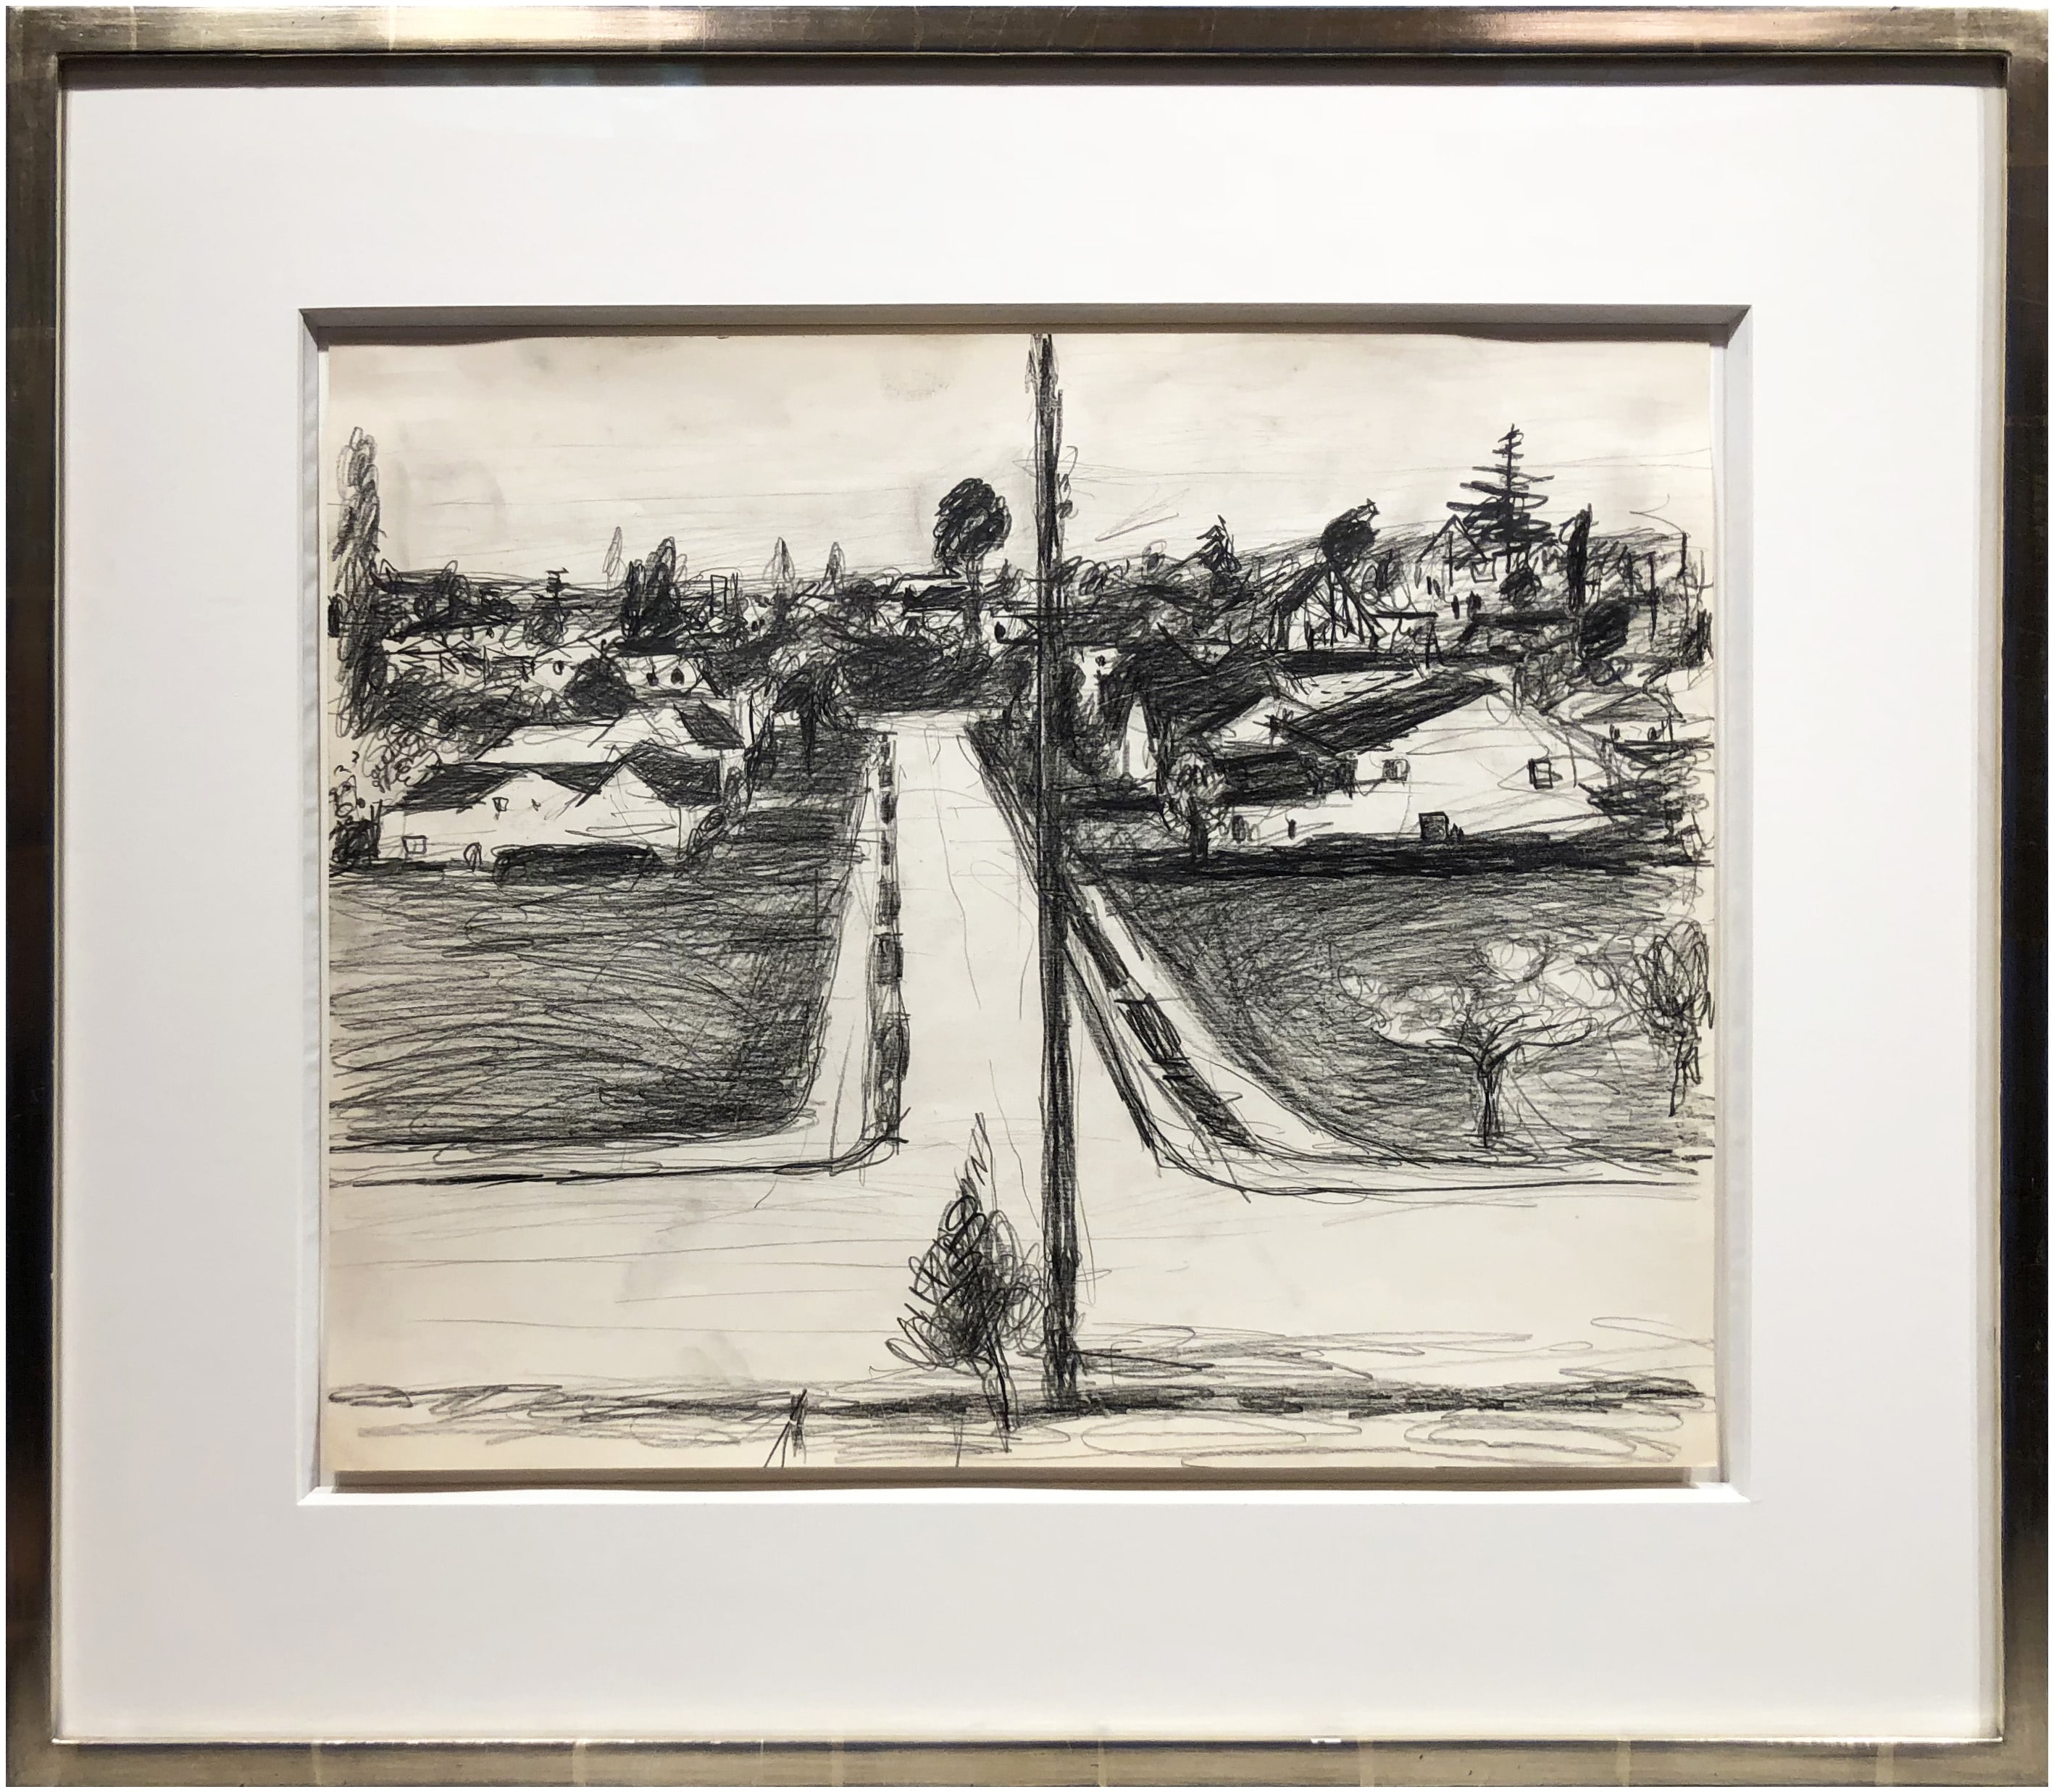 Richard Diebenkorn Black and White Landscape of Town